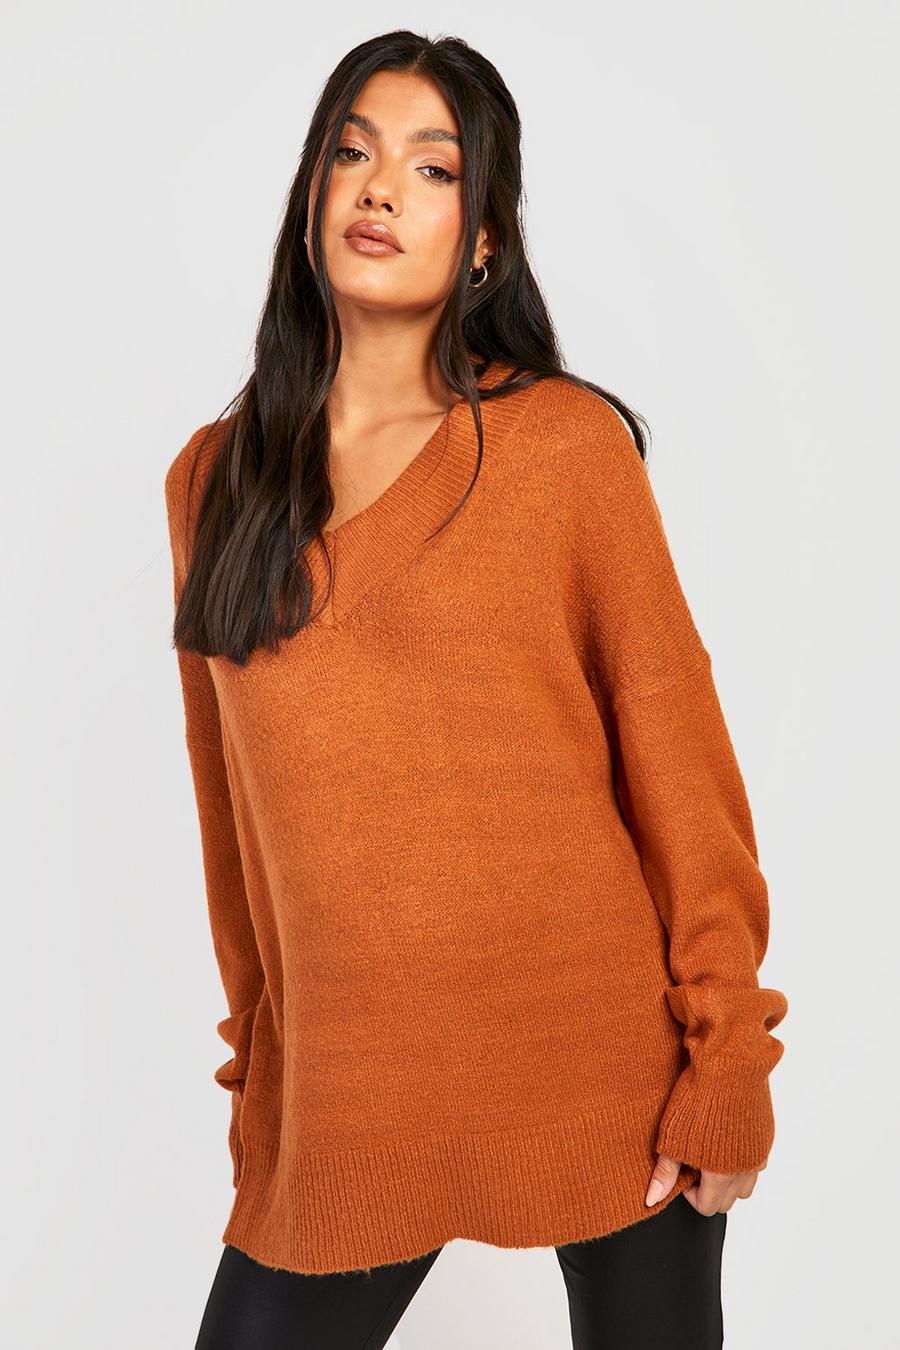 Copper orange Maternity Super Soft V Neck Sweater